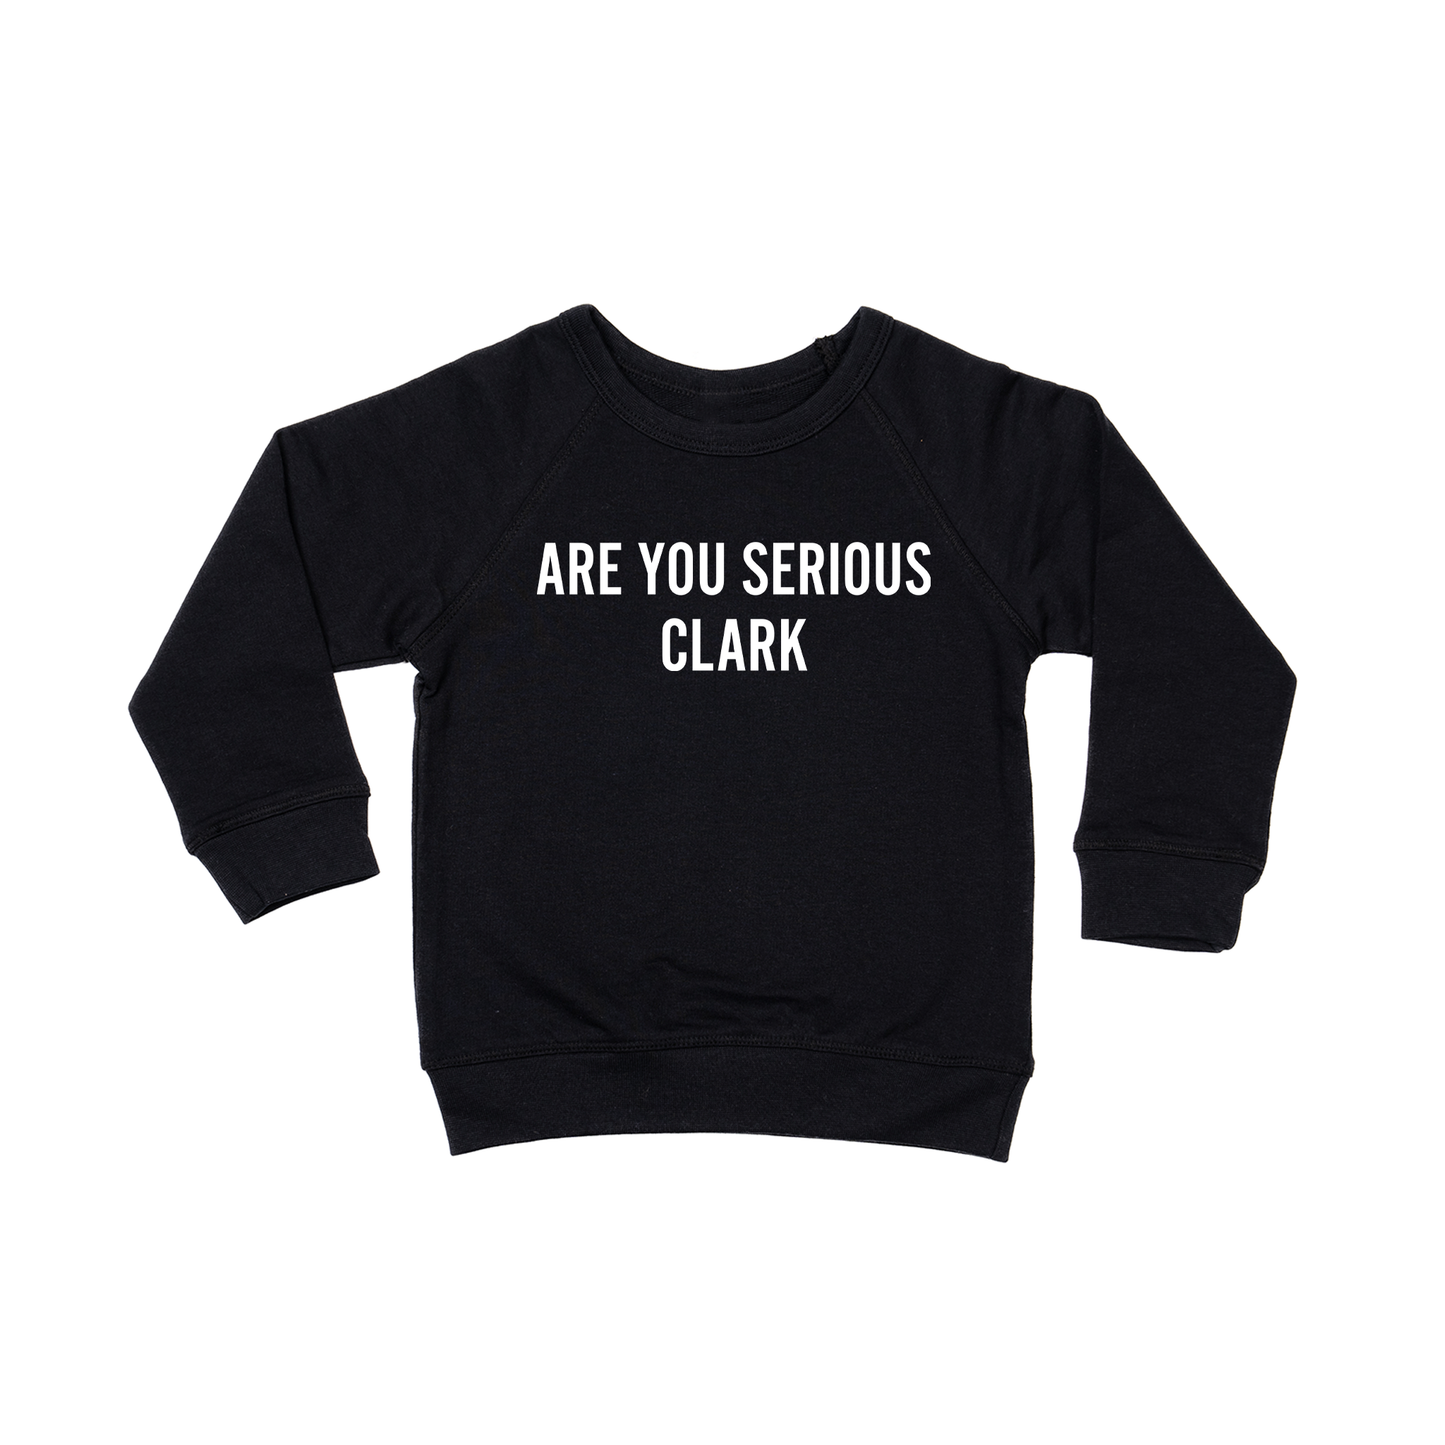 Are You Serious Clark (White) - Kids Sweatshirt (Black)